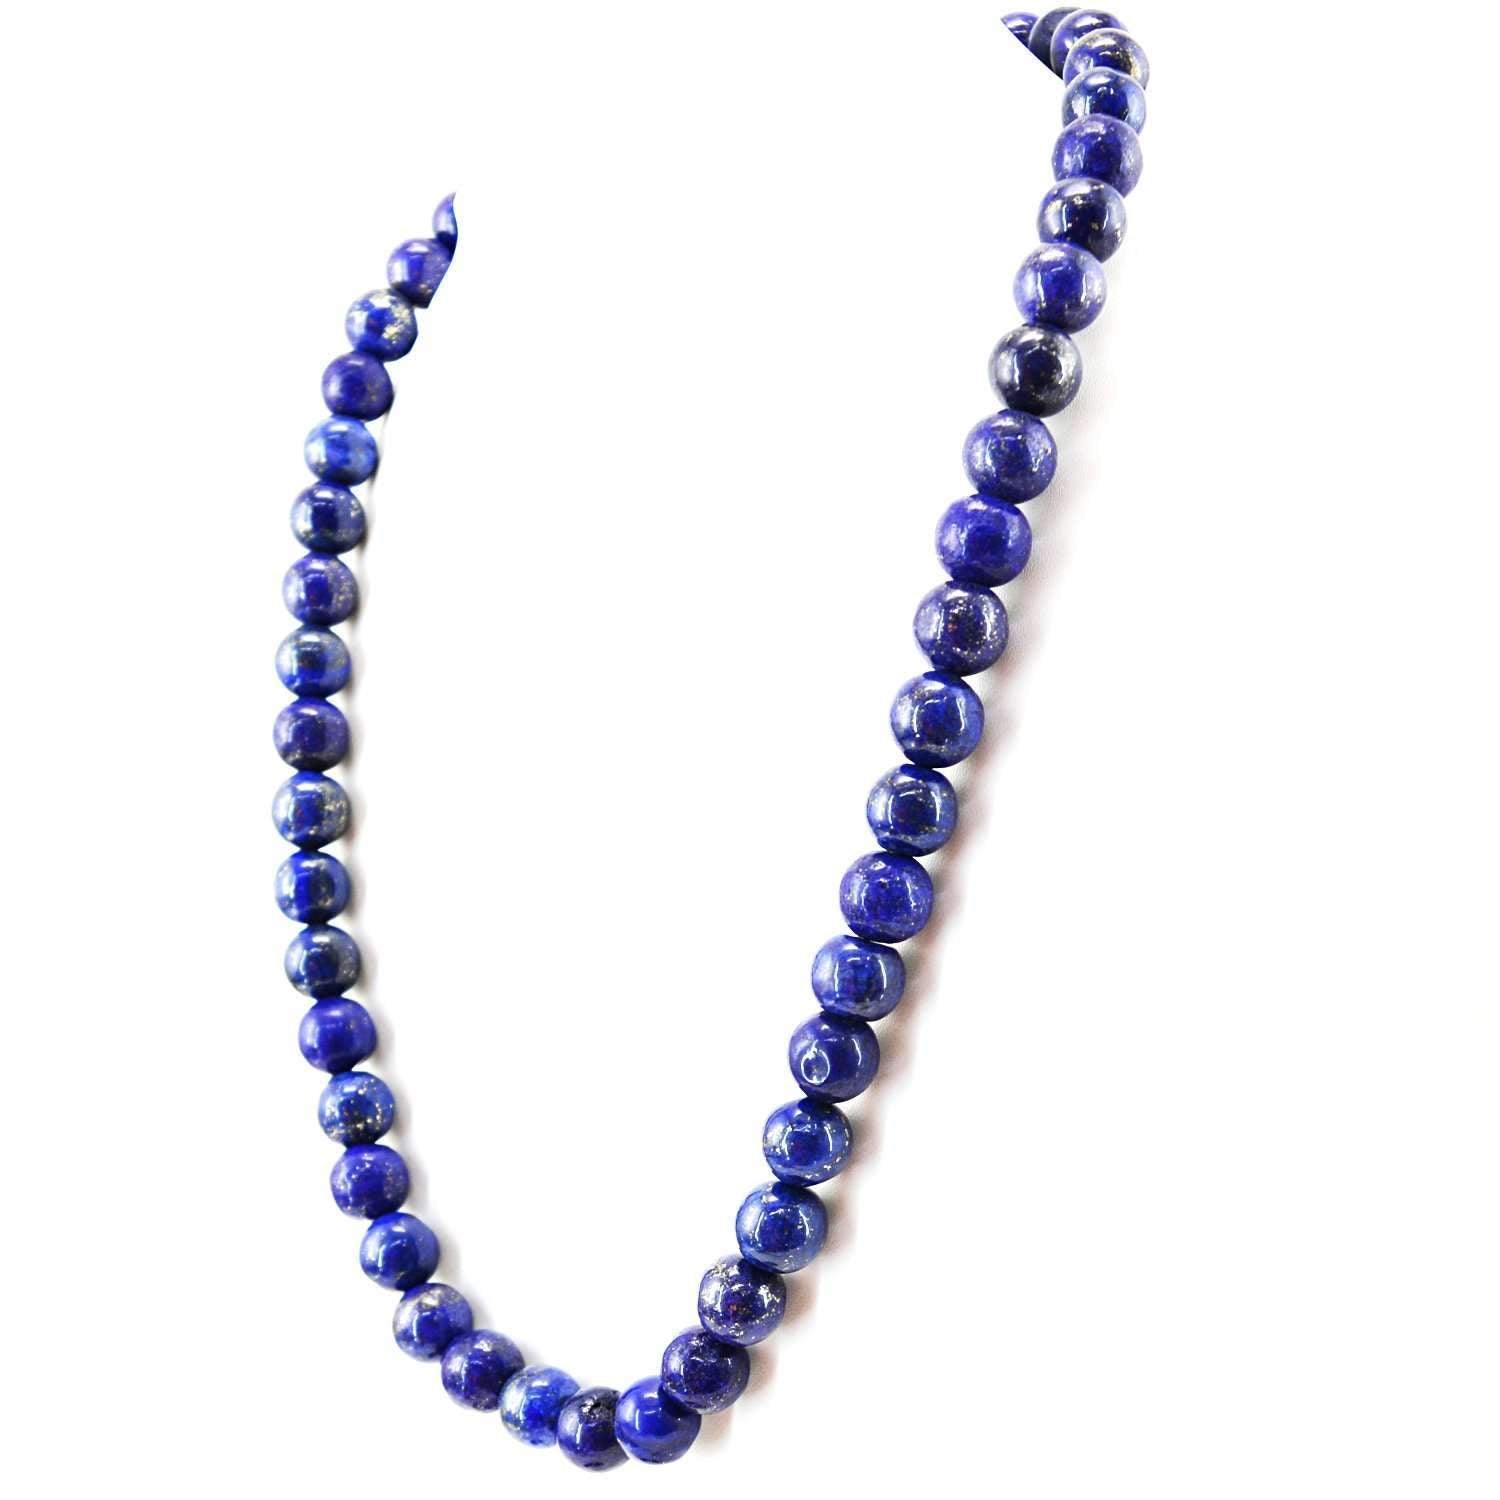 gemsmore:Blue Lapis Lazuli Necklace Natural Round Shape Beads - 20 Inches Long